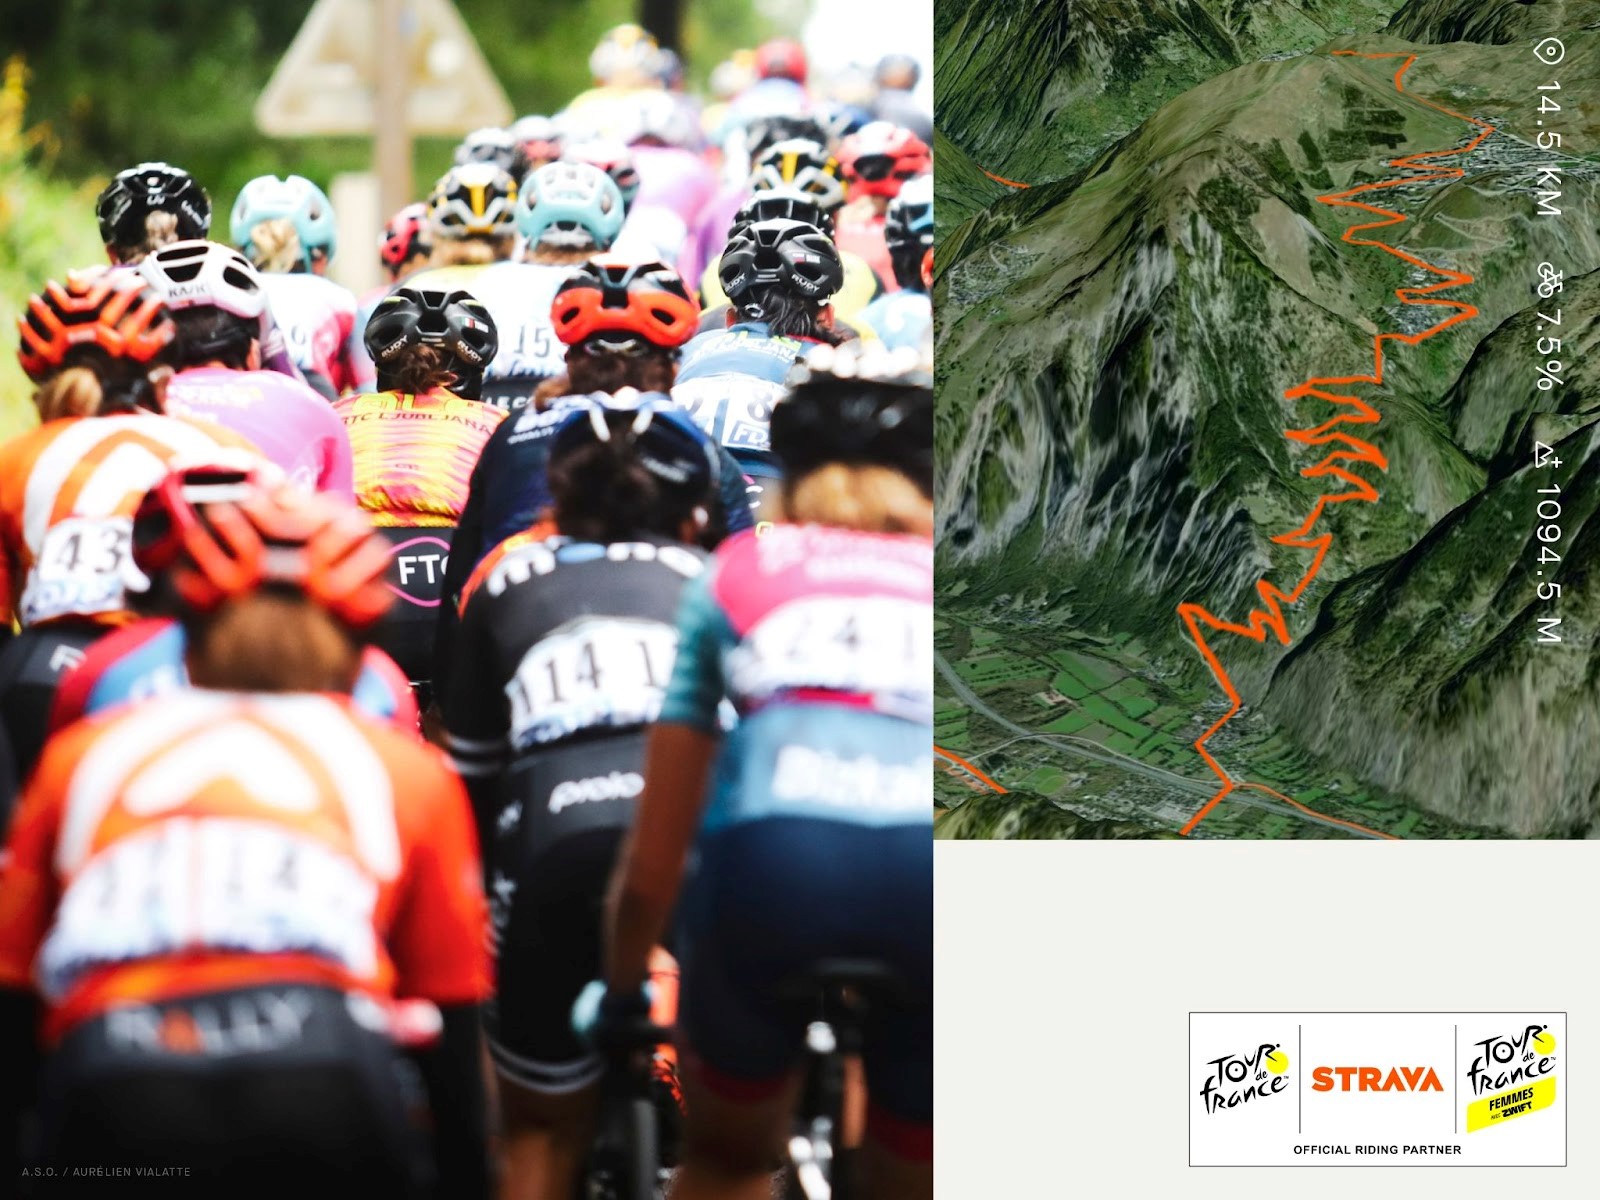 El Tour de France y el Tour de France Femmes avec Zwift llegan a Strava